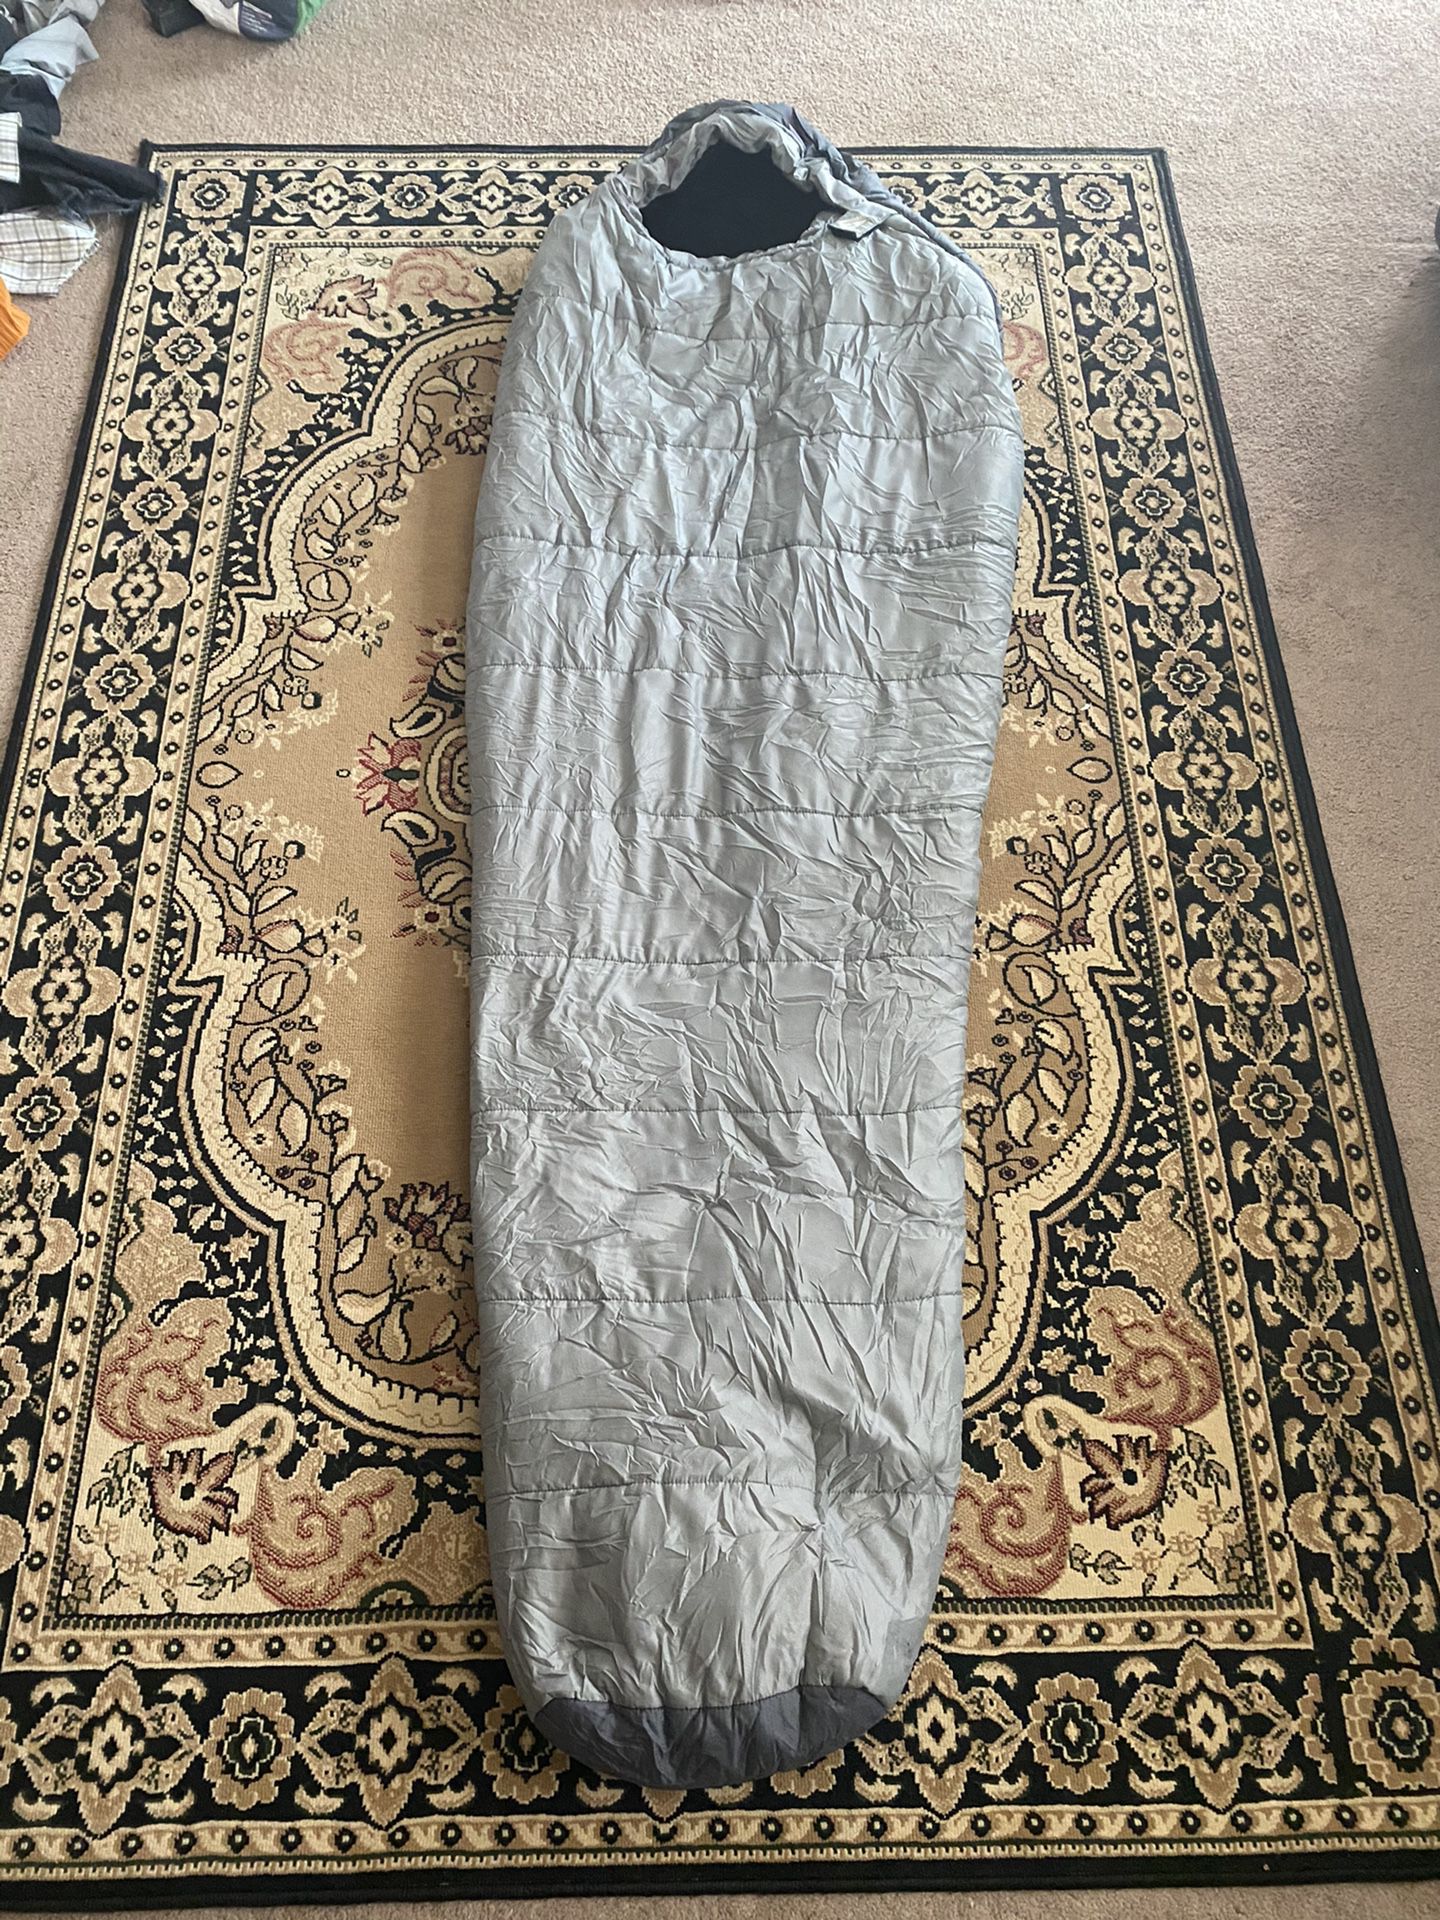 Kelty Chinook 0 degree Sleeping bag